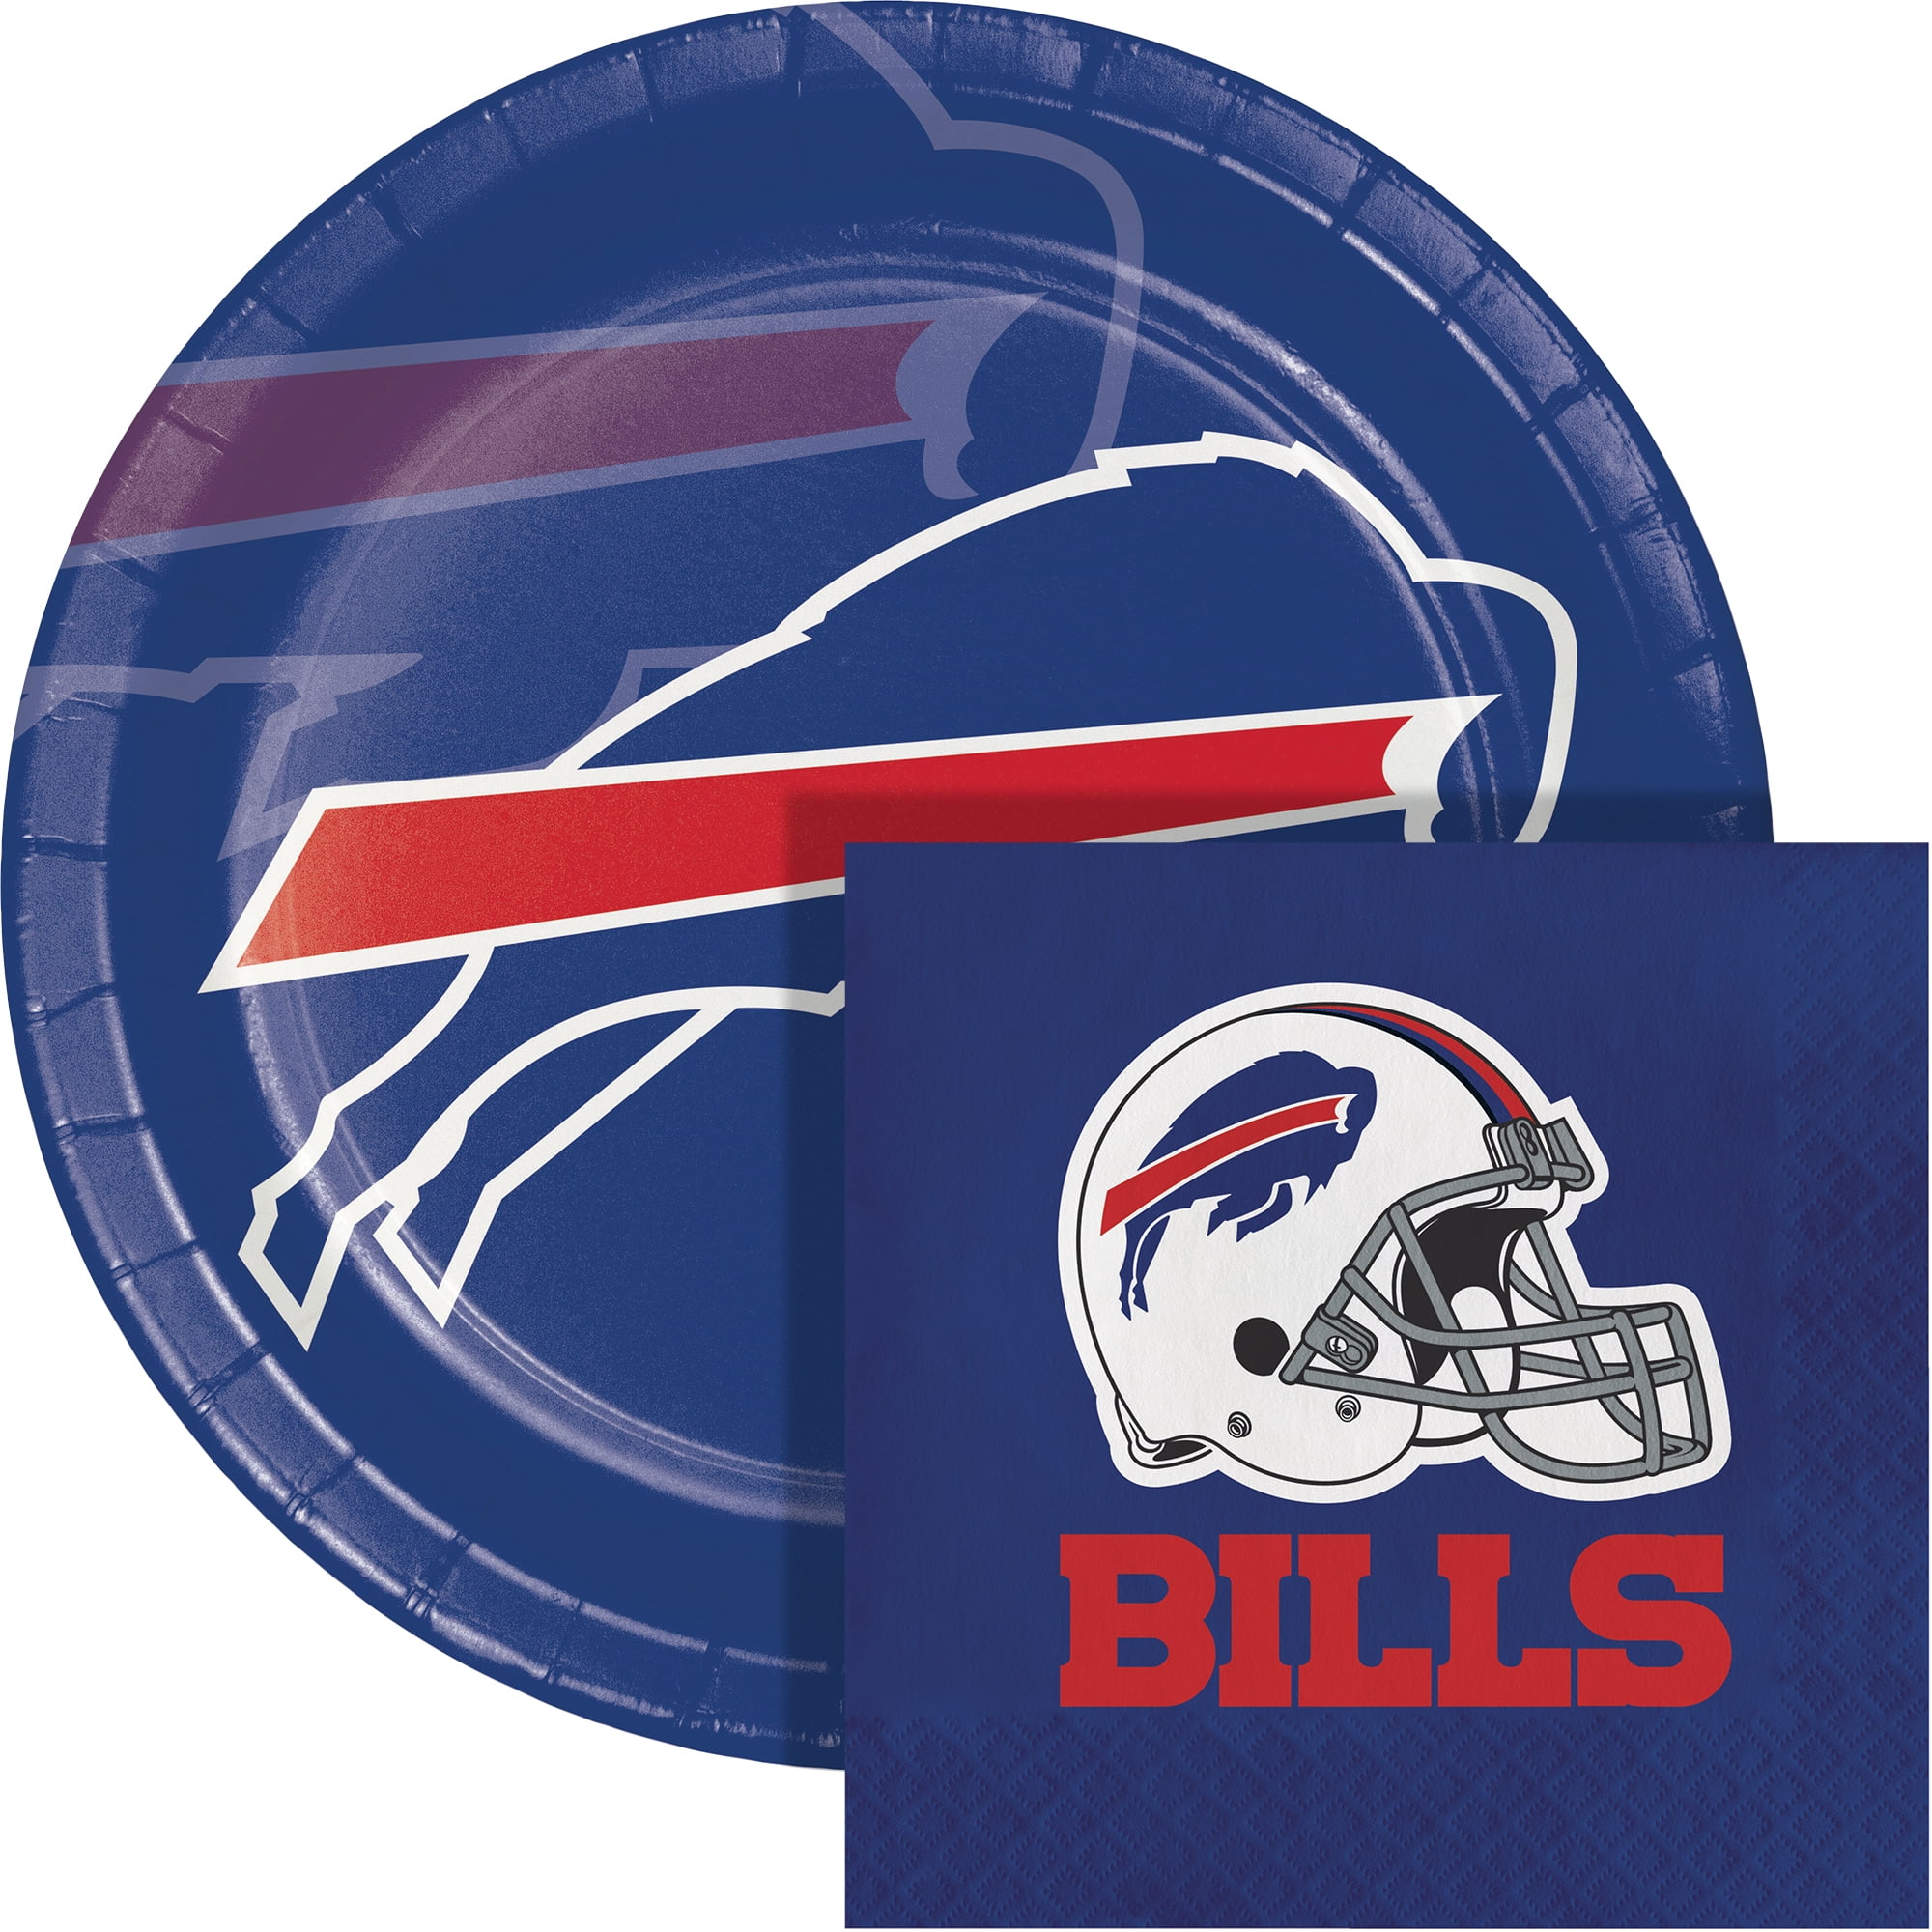 NFL - Buffalo Bills Uniform Starter Rug 19x30 